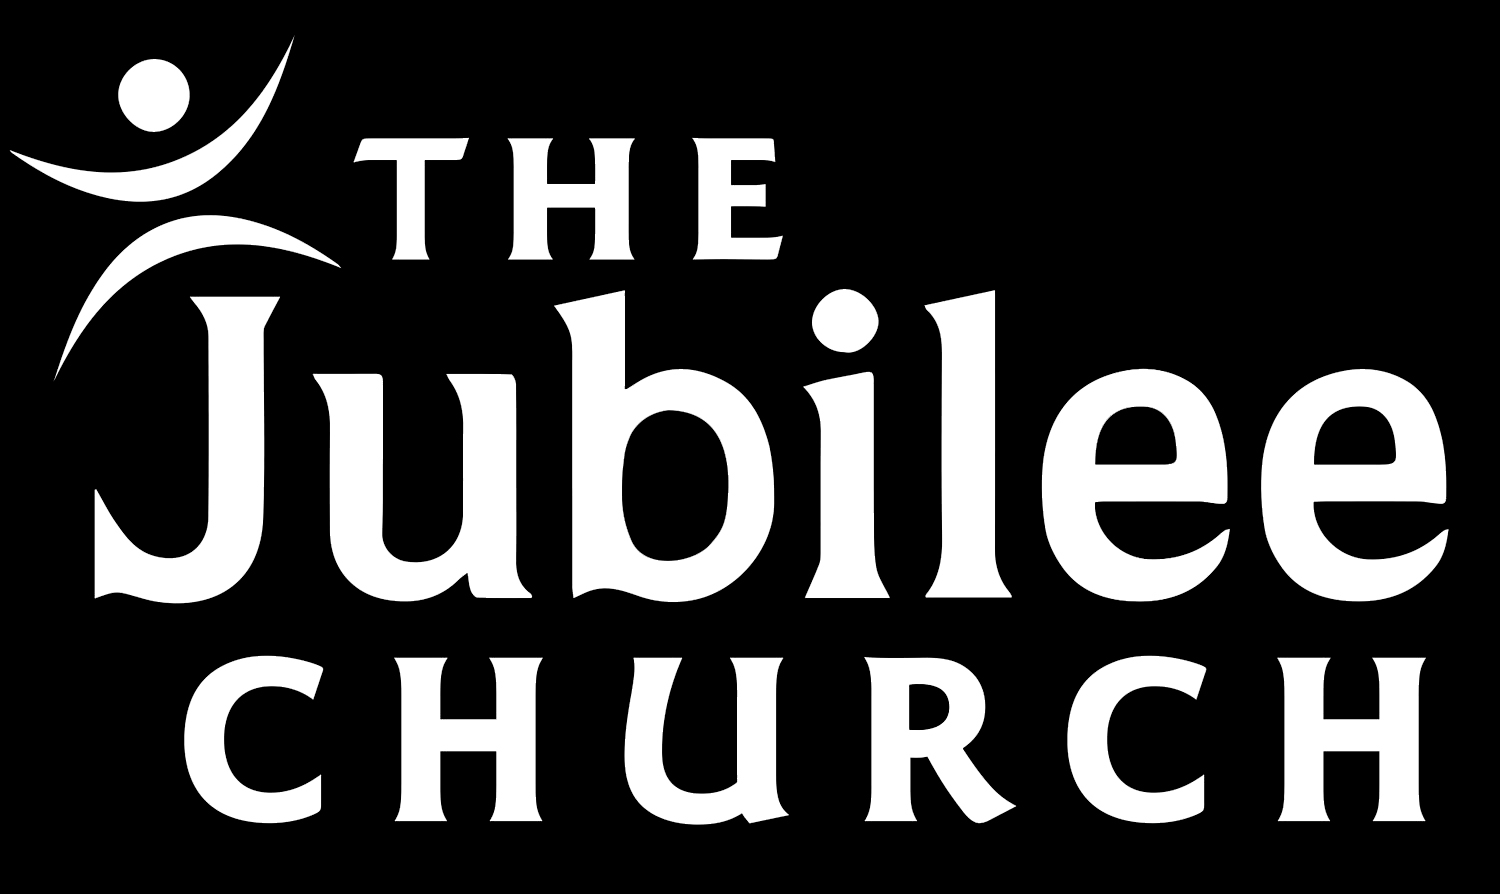 Jubilee Community Church